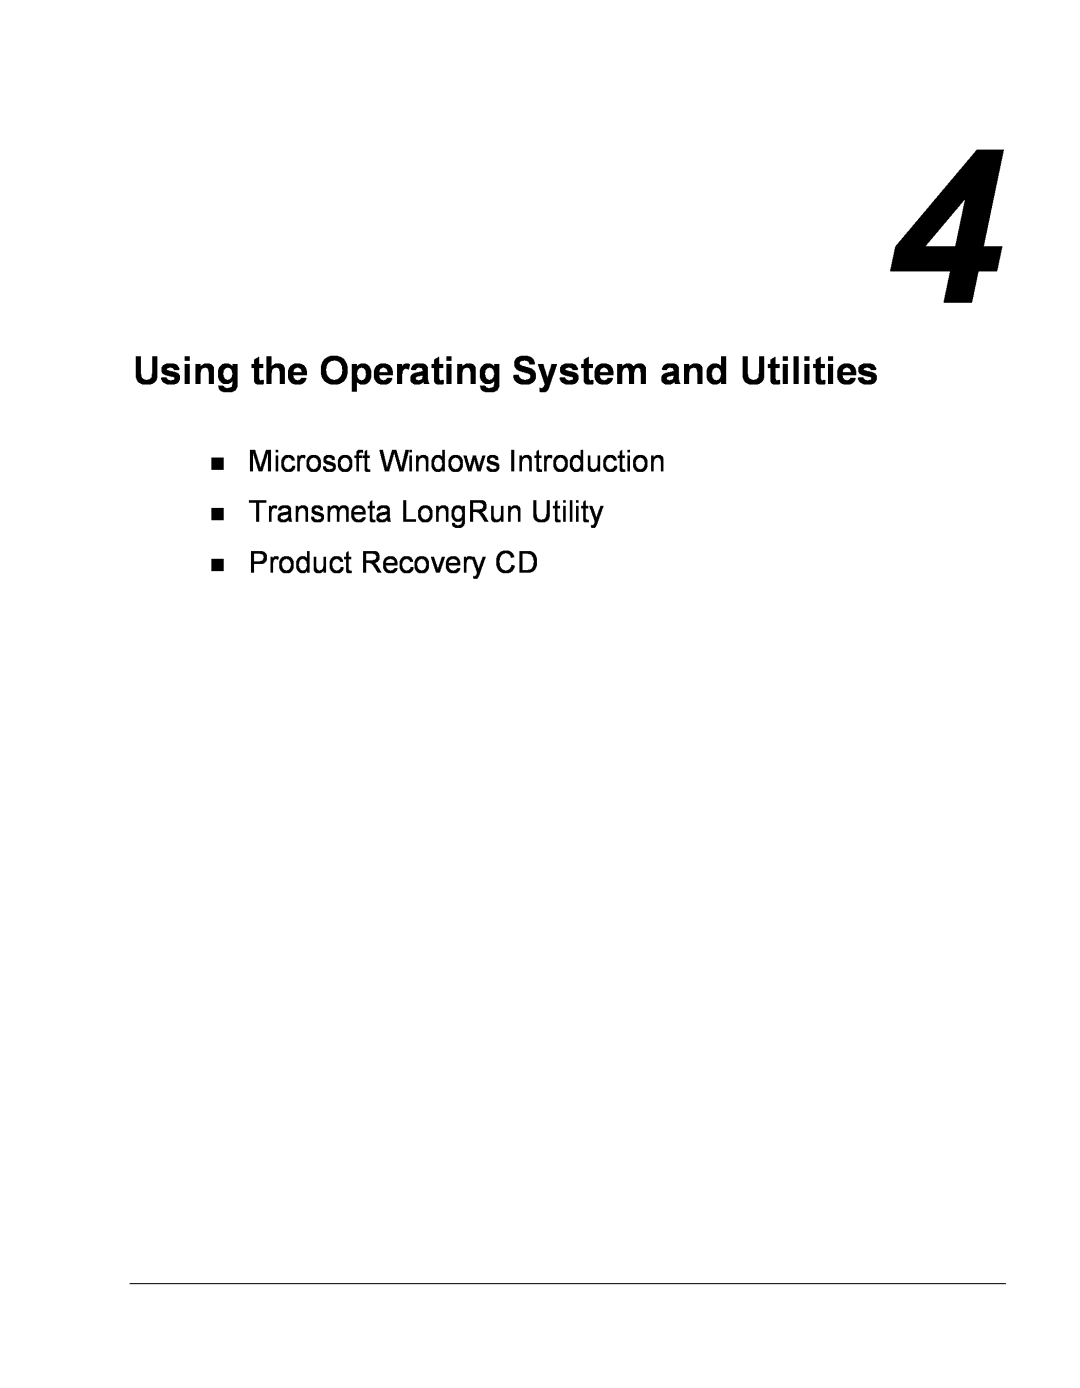 NEC Versa Series manual Using the Operating System and Utilities, Microsoft Windows Introduction Transmeta LongRun Utility 